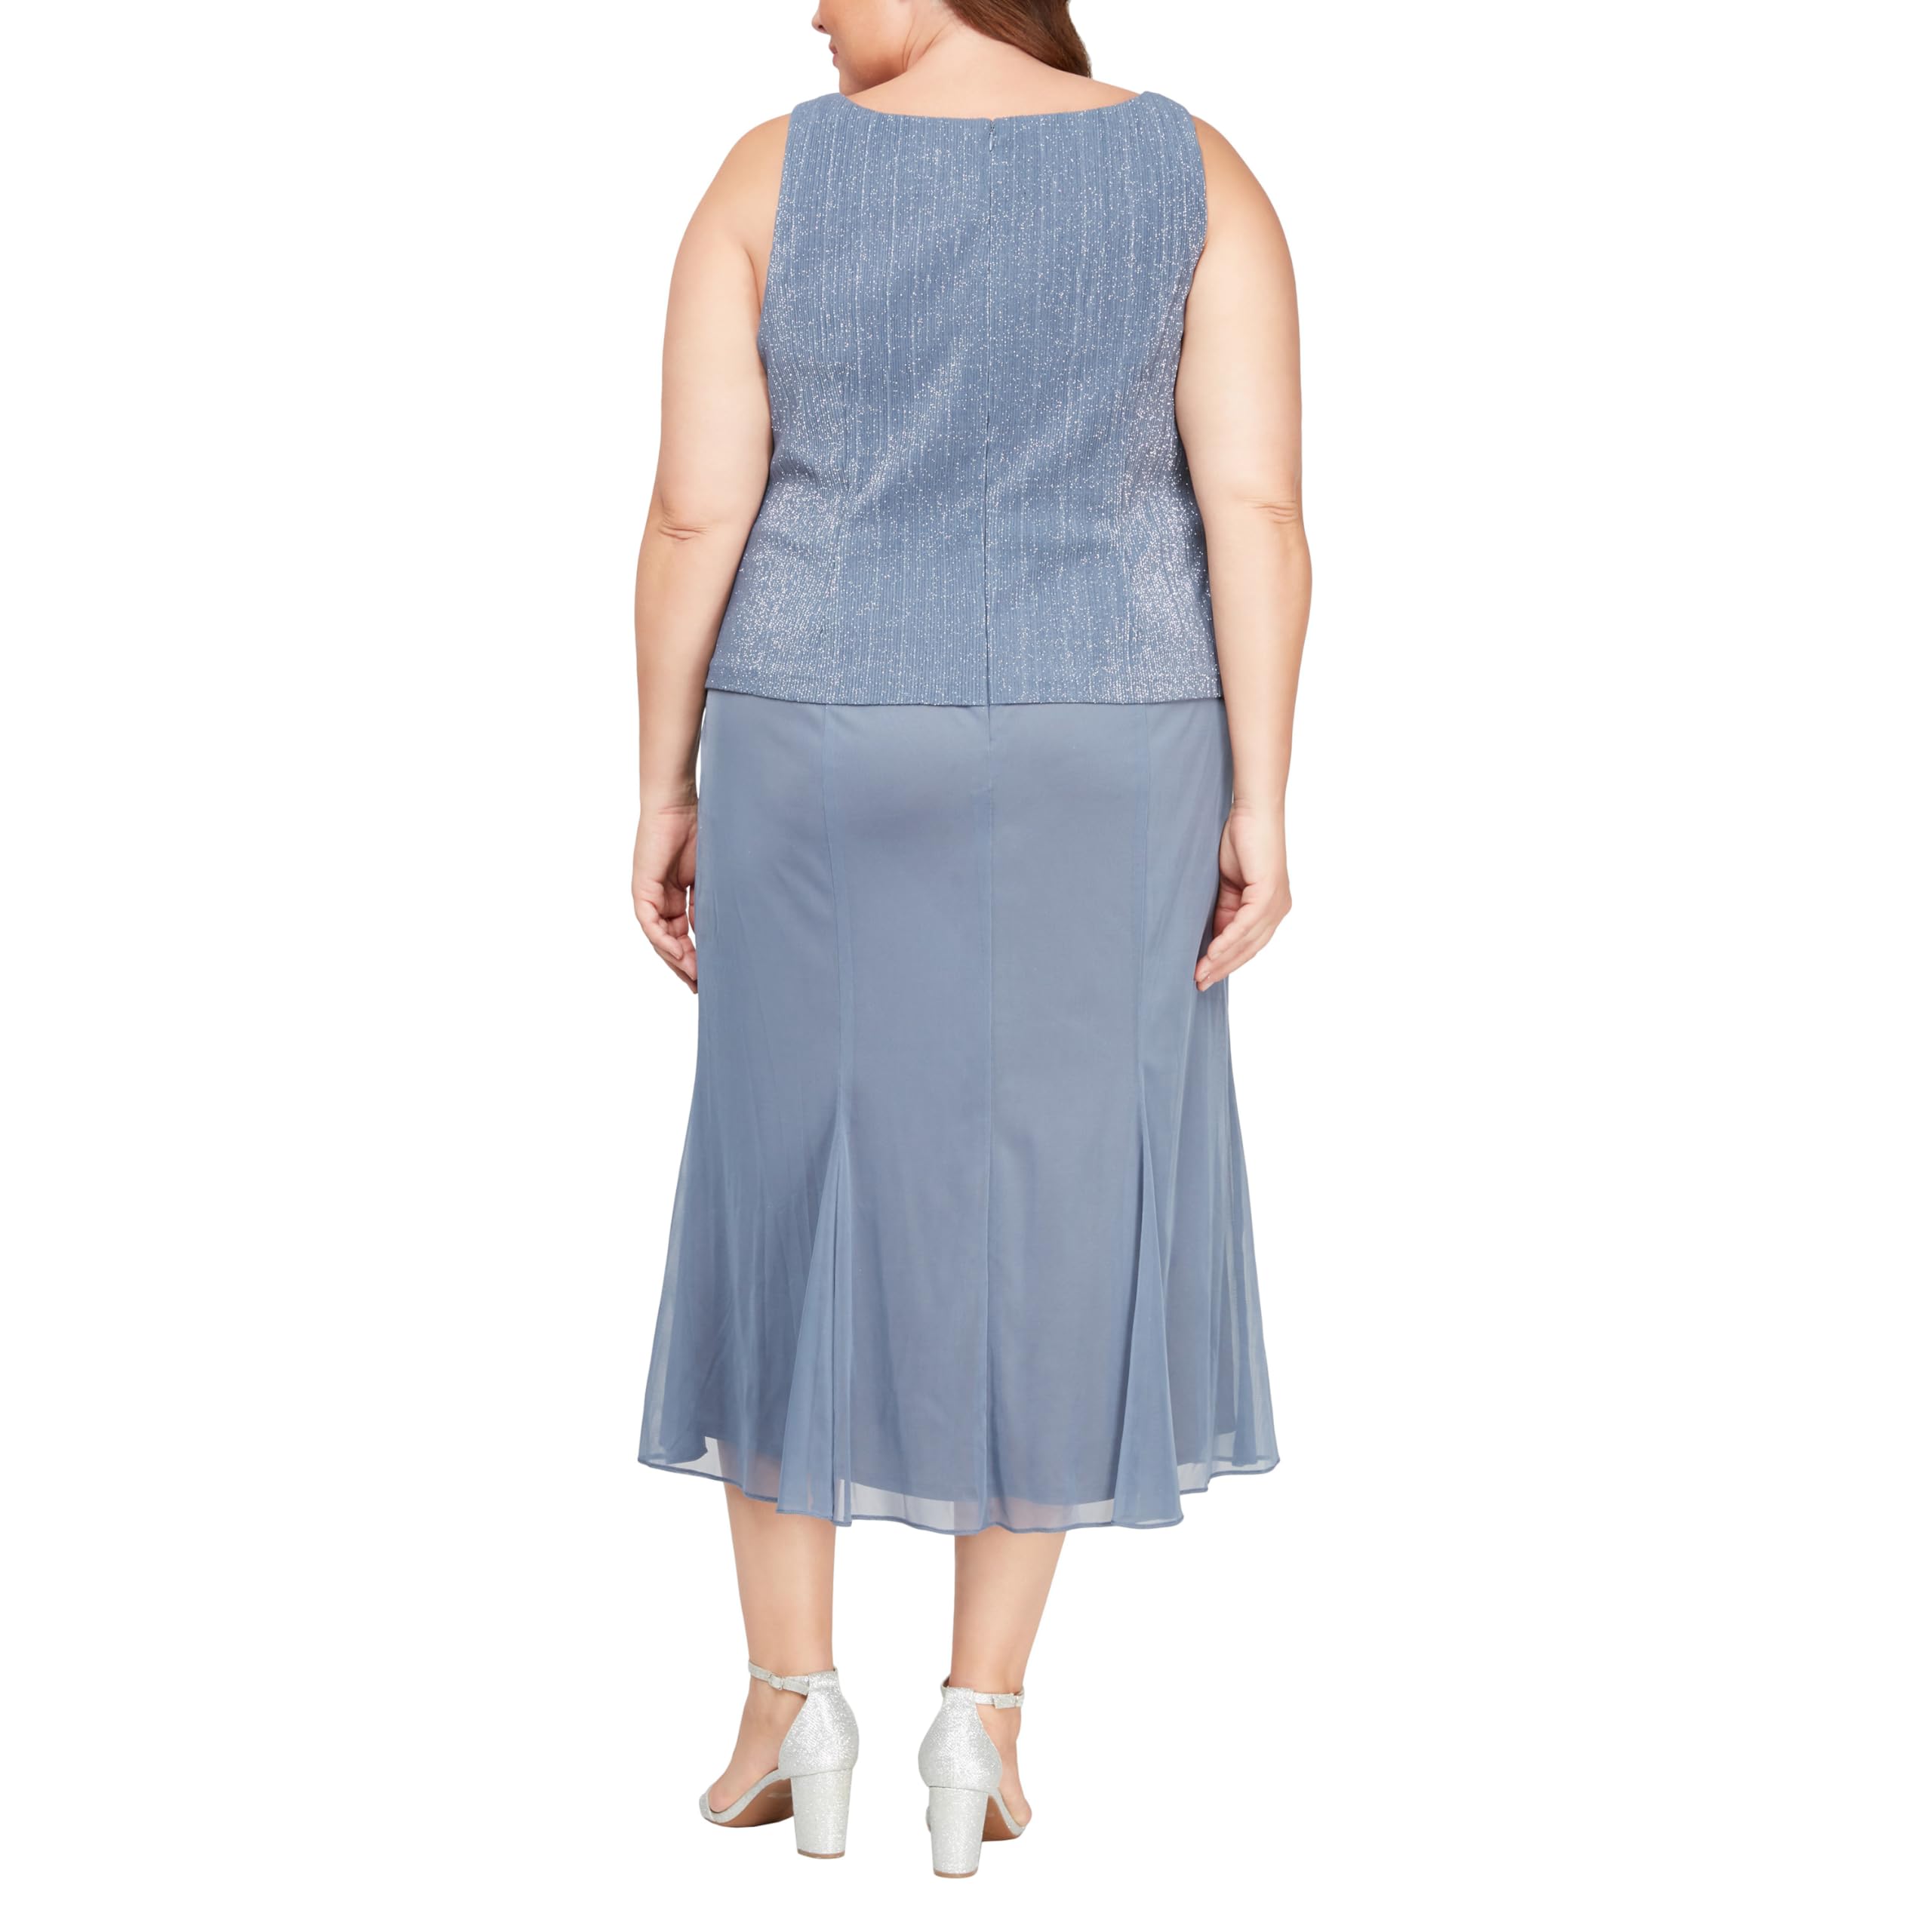 Alex Evenings Women's Plus Size Tea Length Jacket Dress with Sequin Beaded Trim, Steel Glitter